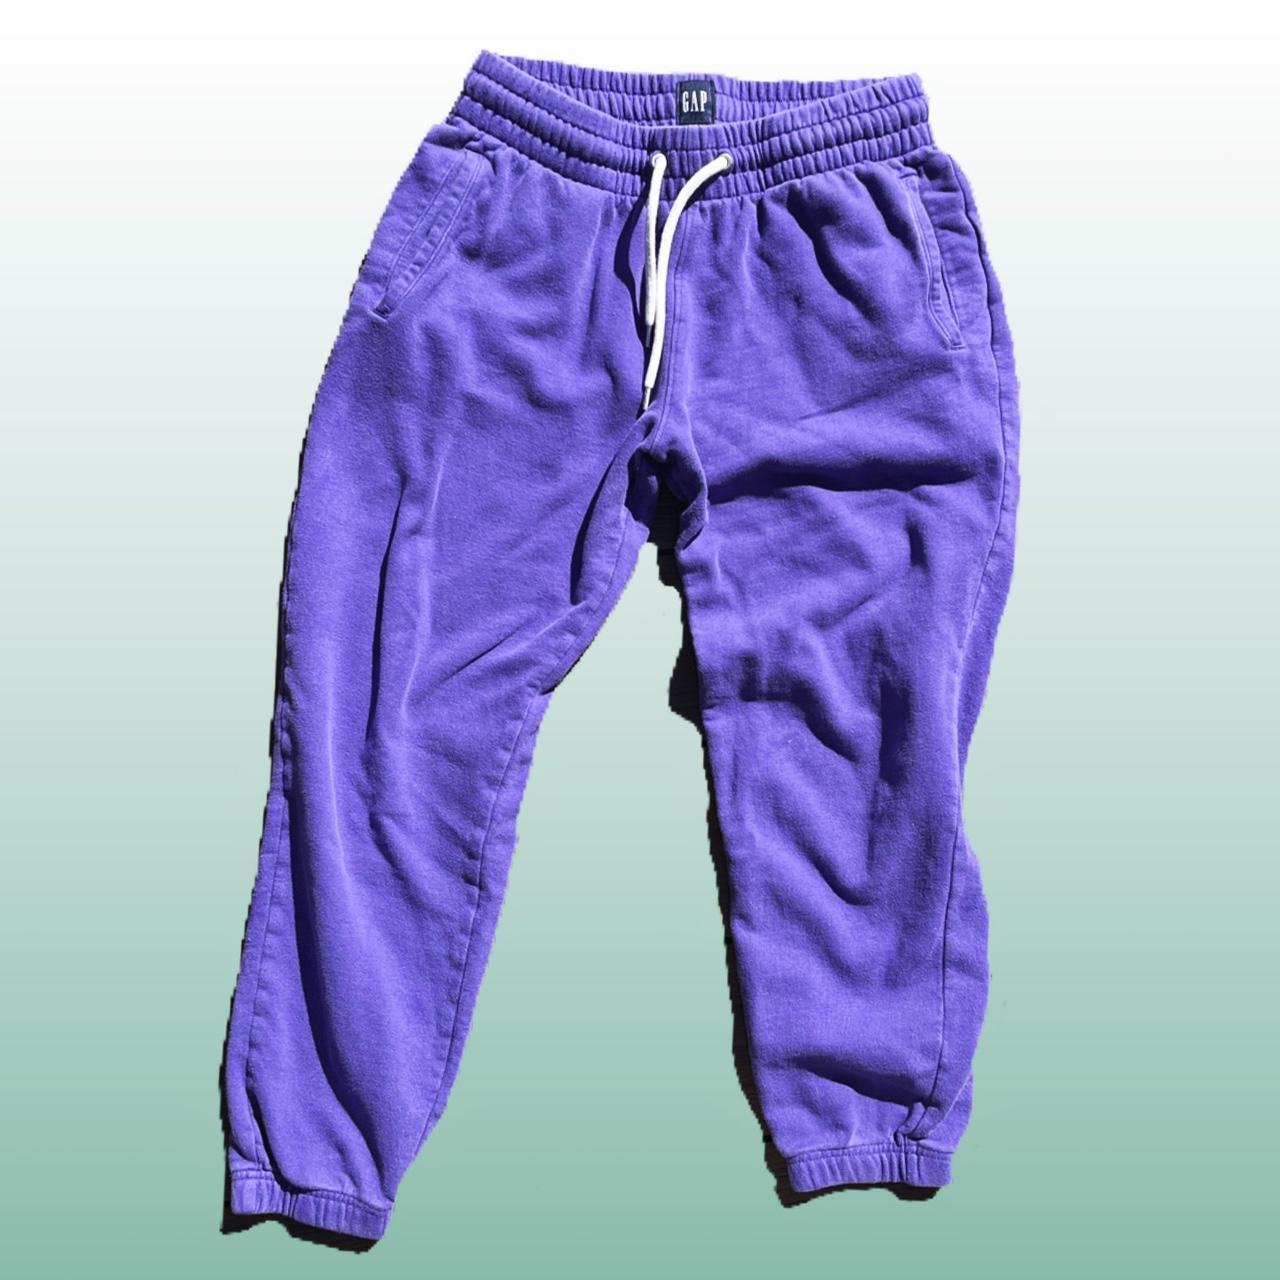 Kikiva Scrunch Leggings Size M Light purple/ mauve - Depop